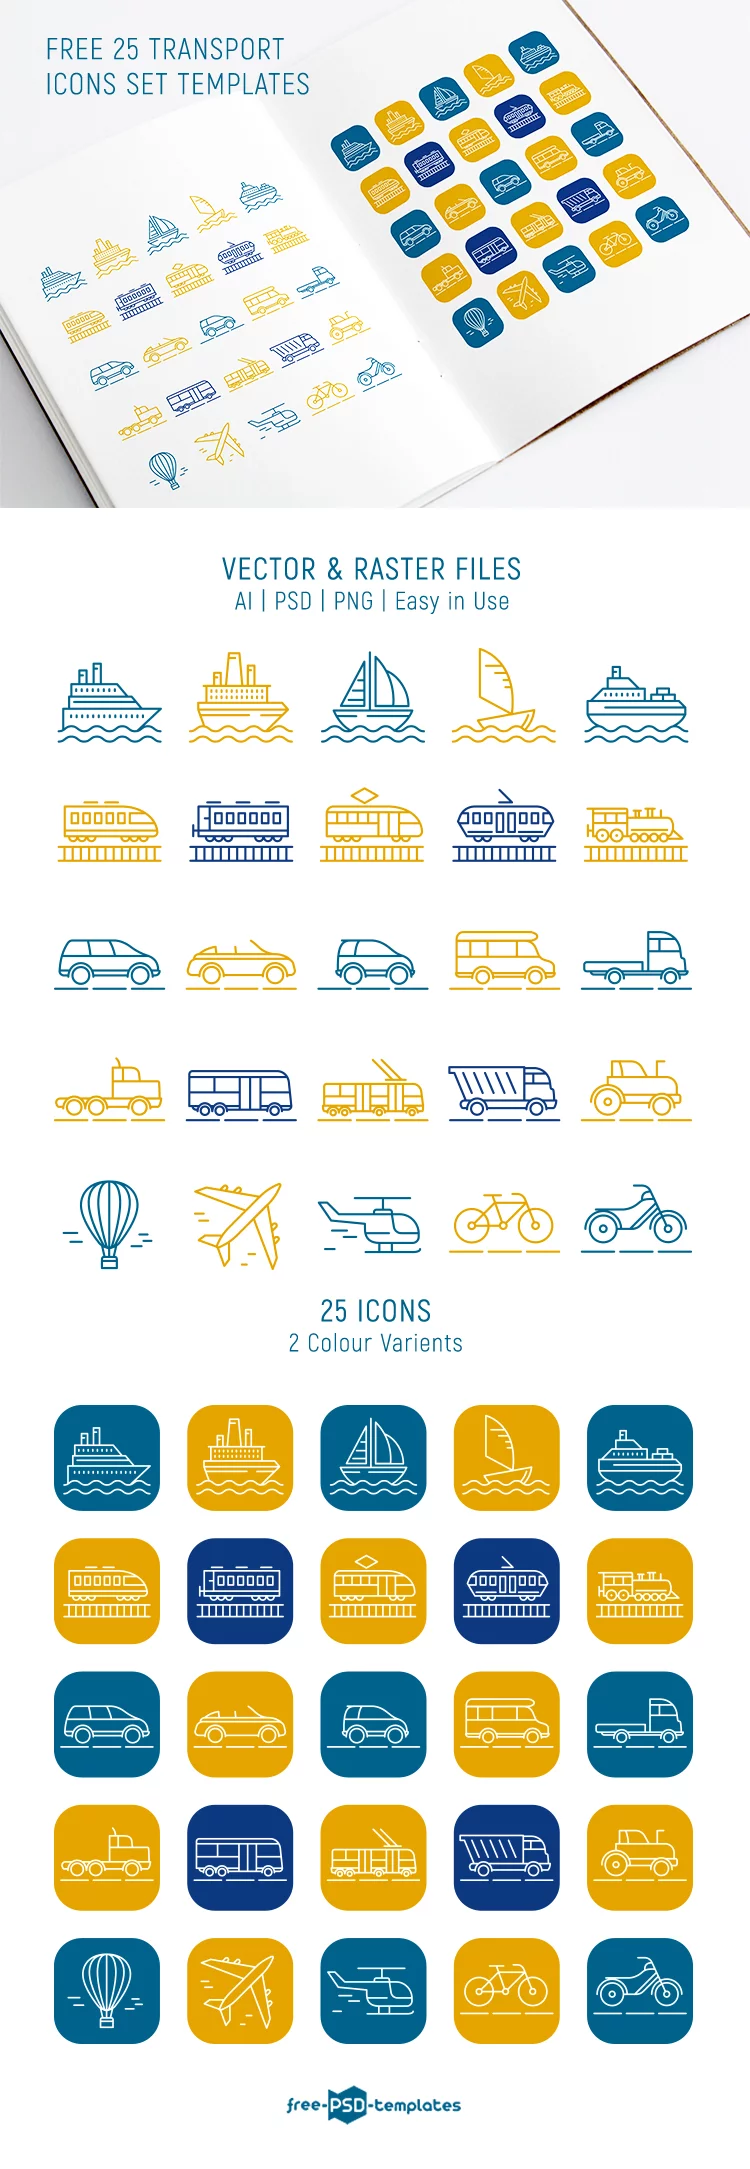 Free 25 Transport Icons Set Templates